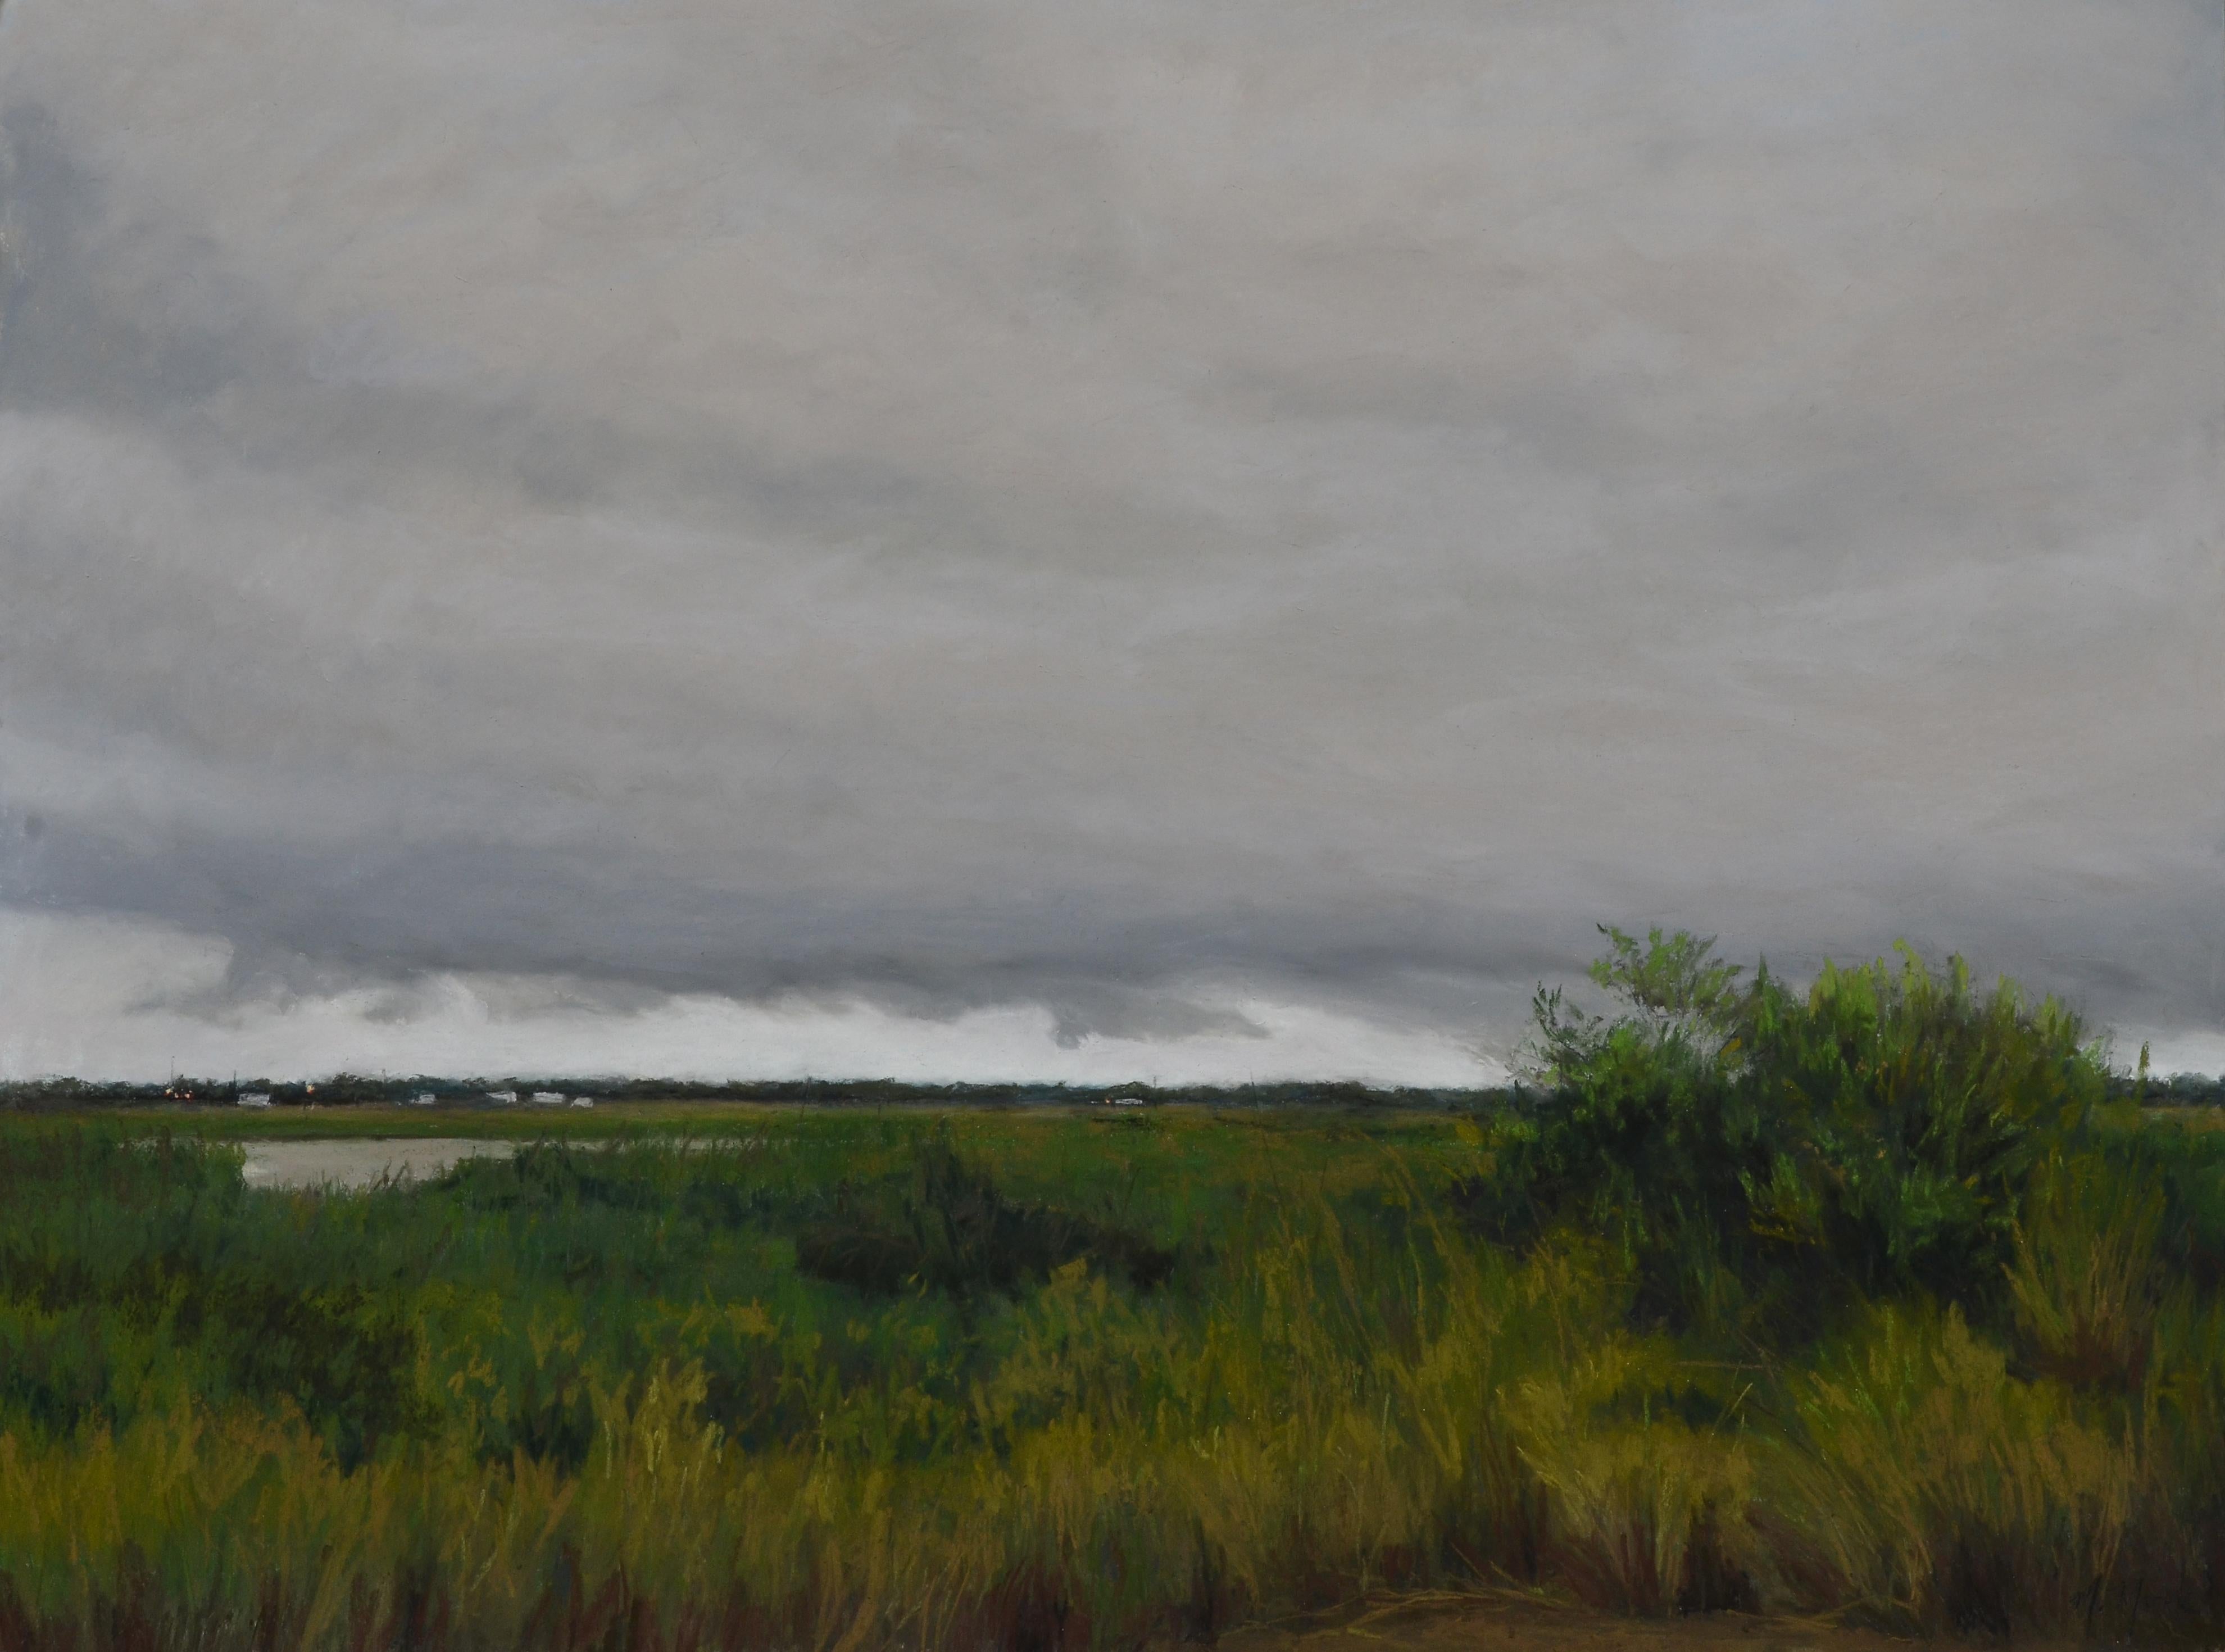 Mary Monk Landscape Art - "Dark and Stormy Marsh" original soft pastel on paper, en plein air landscape